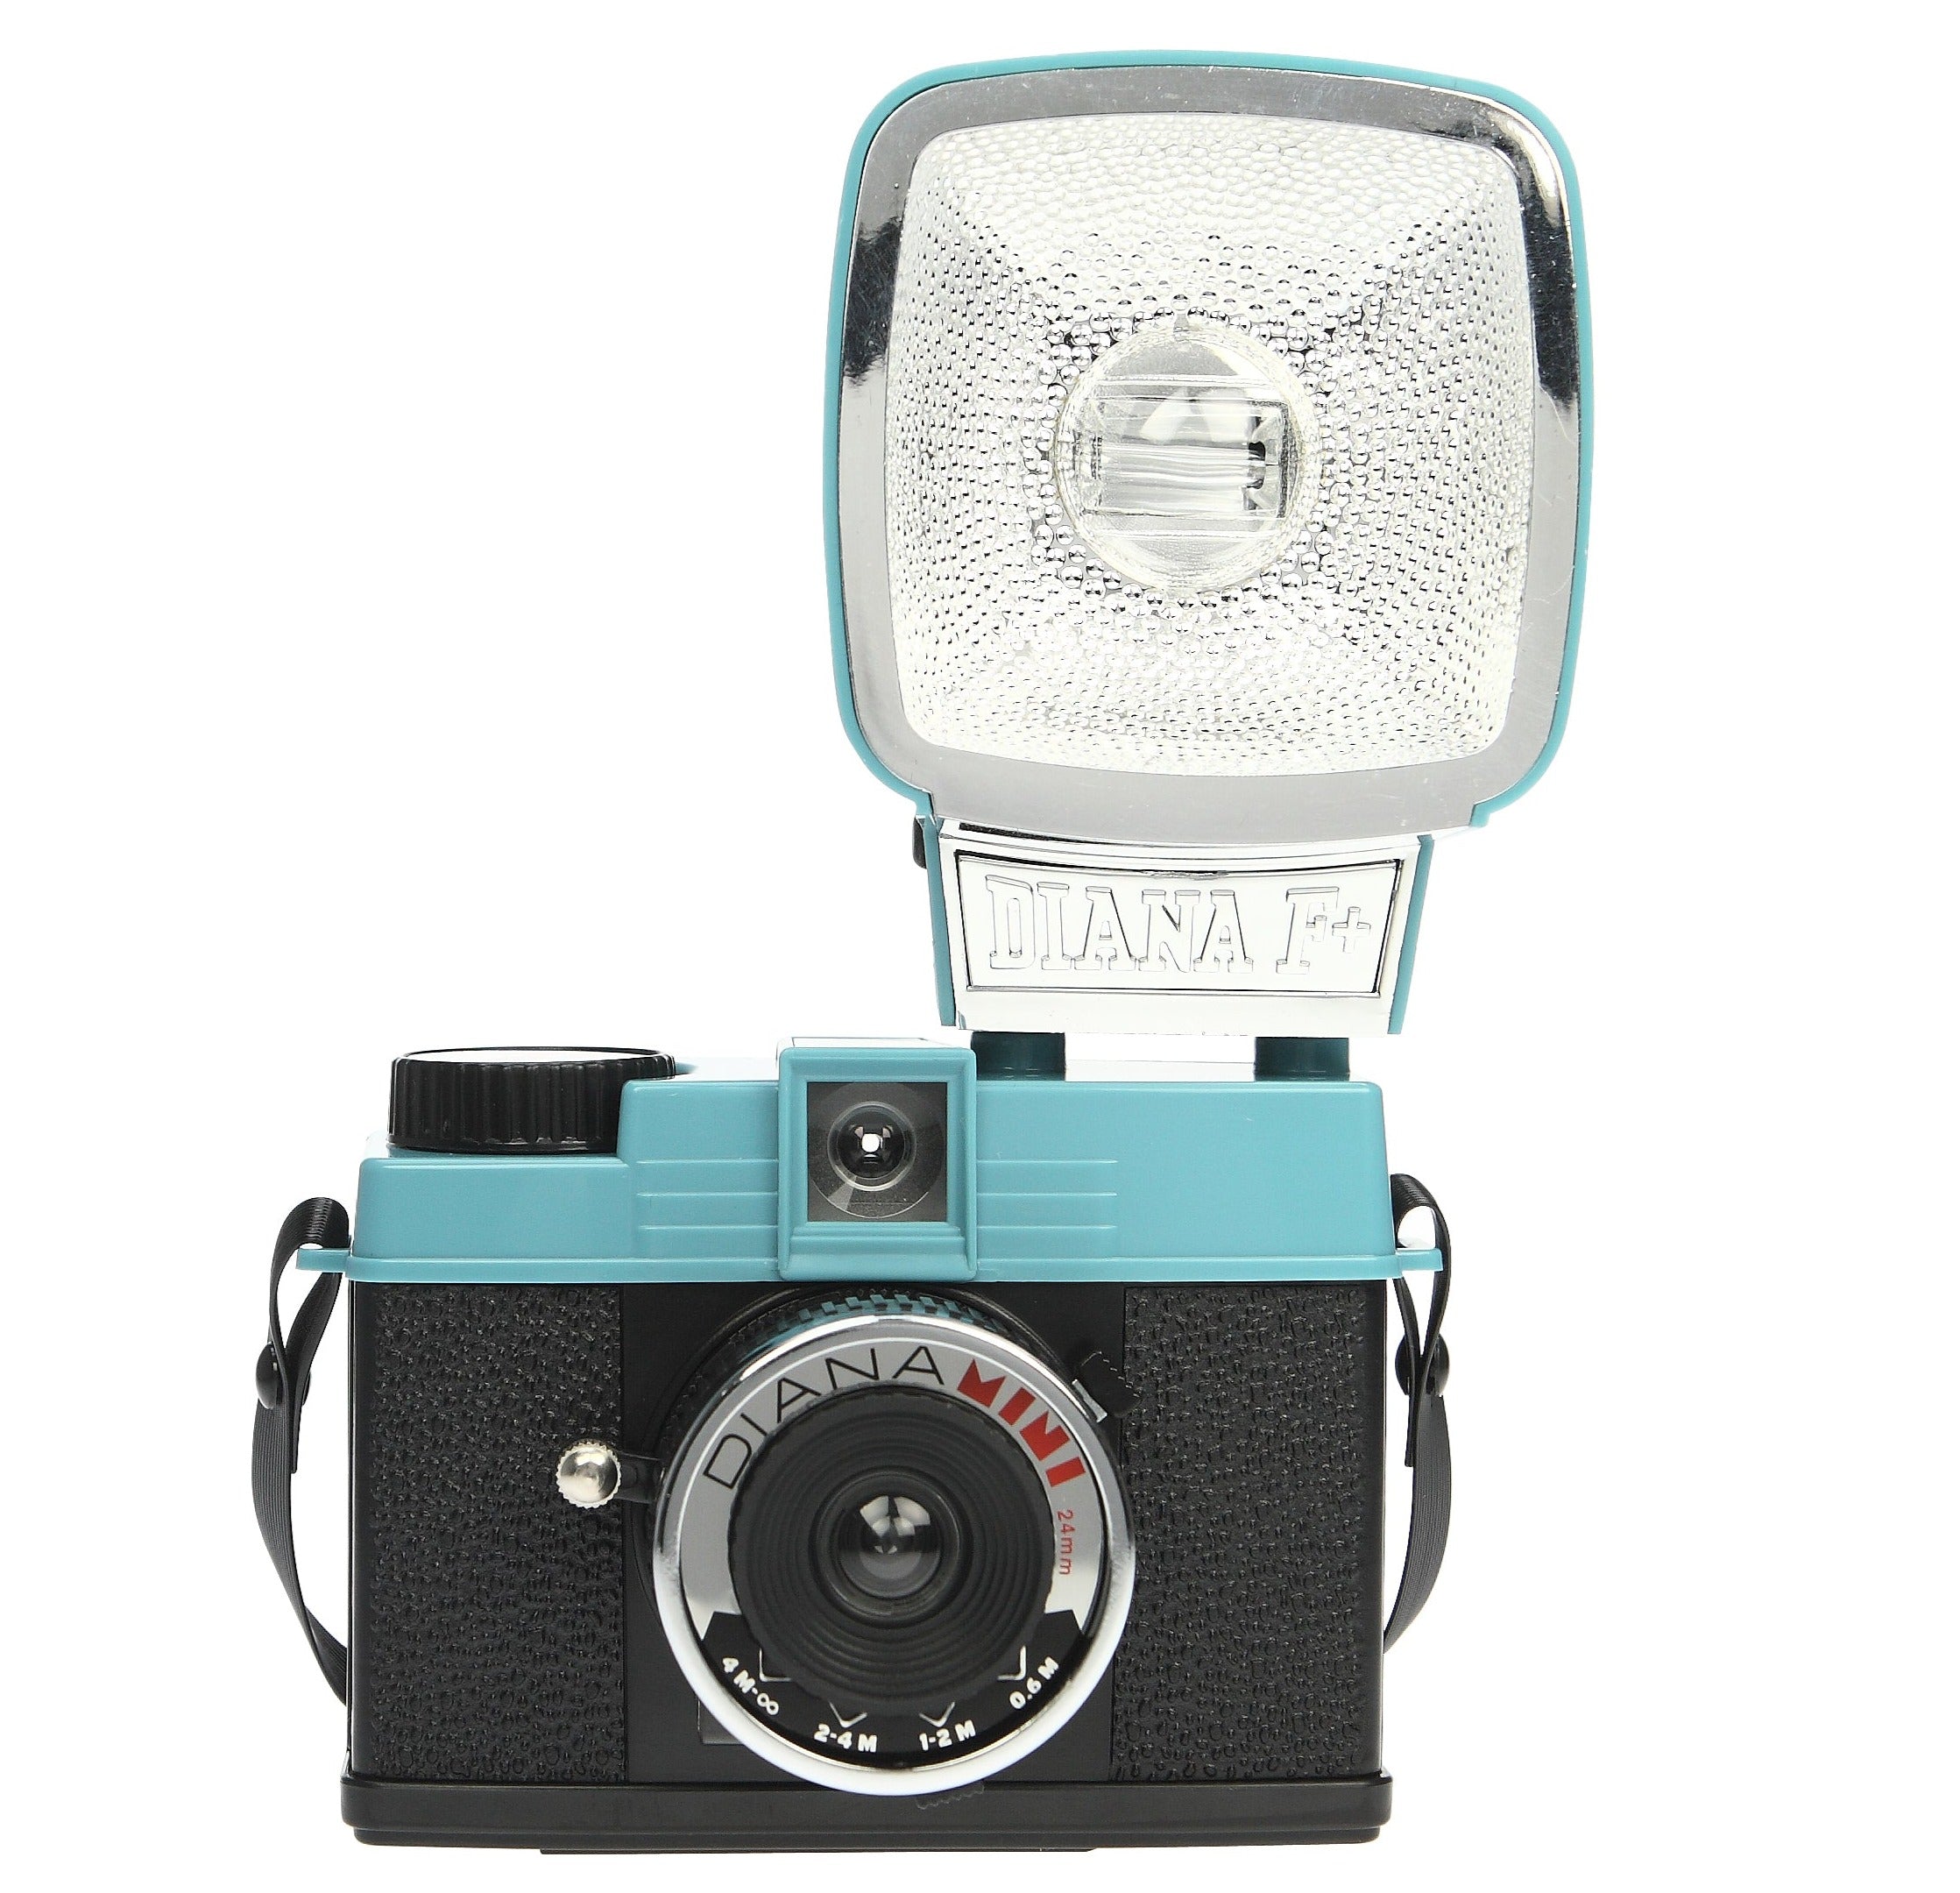 CLEARANCE SALE ! LOMOGRAPHY Diana Mini & Flash, 35mm camera